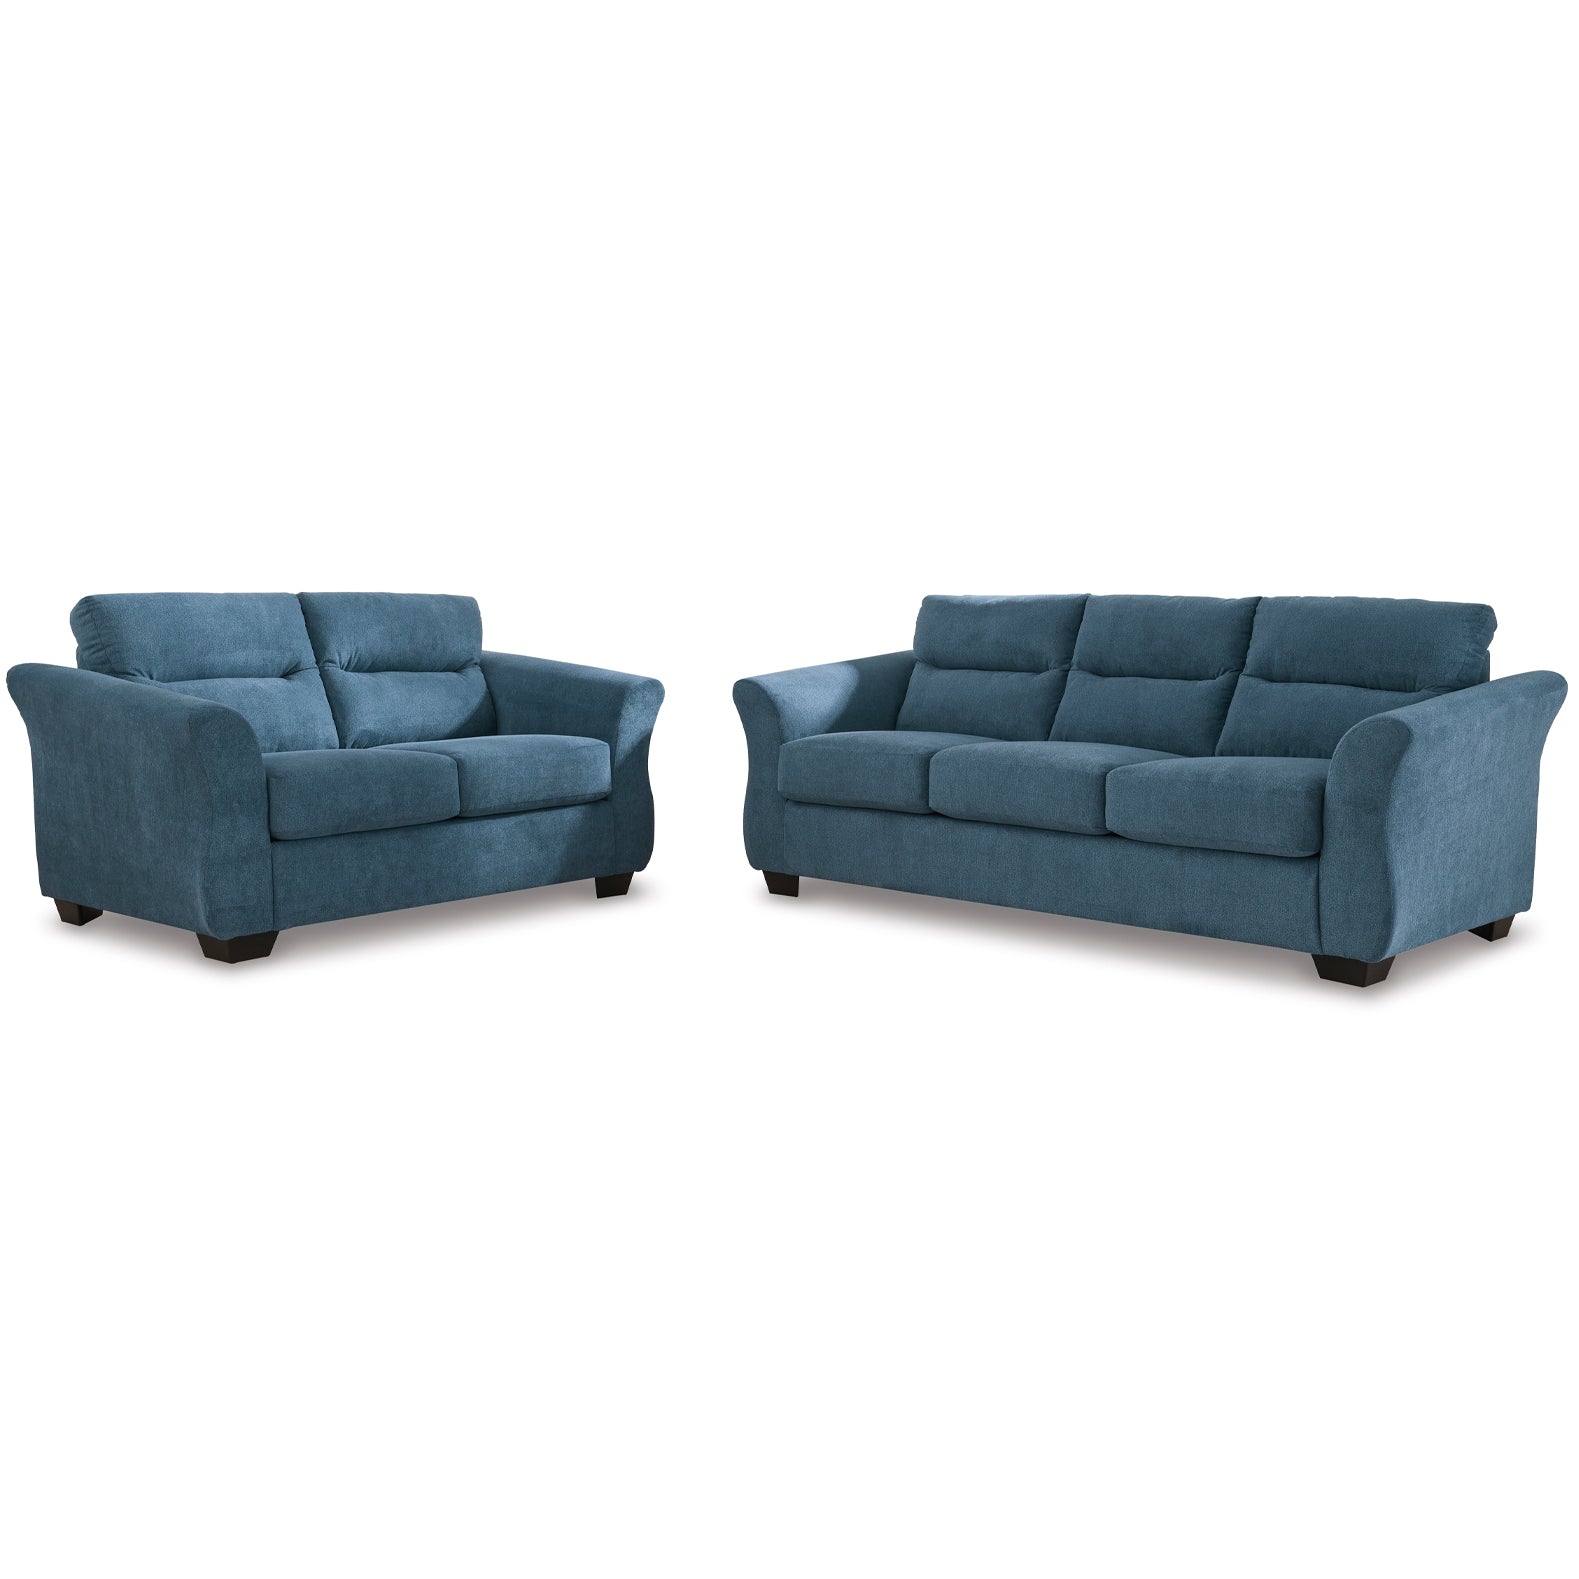 Miravel Sofa and Loveseat in Indigo Color